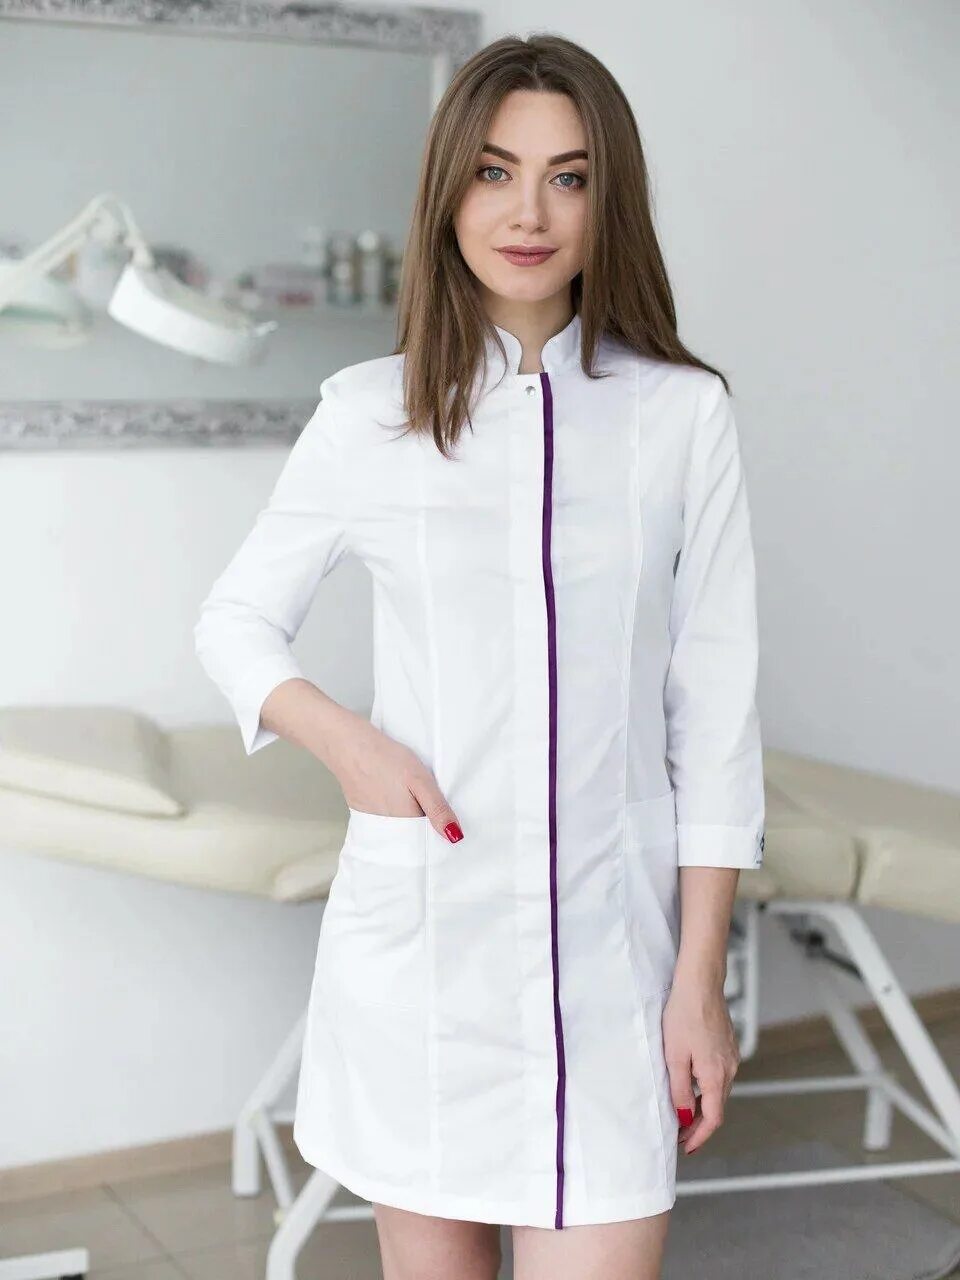 Халат медицинский женский белый Мерион. Белый халат медицинский женский. Медицинский халат с длинным рукавом. Дизайнерские медицинские халаты.